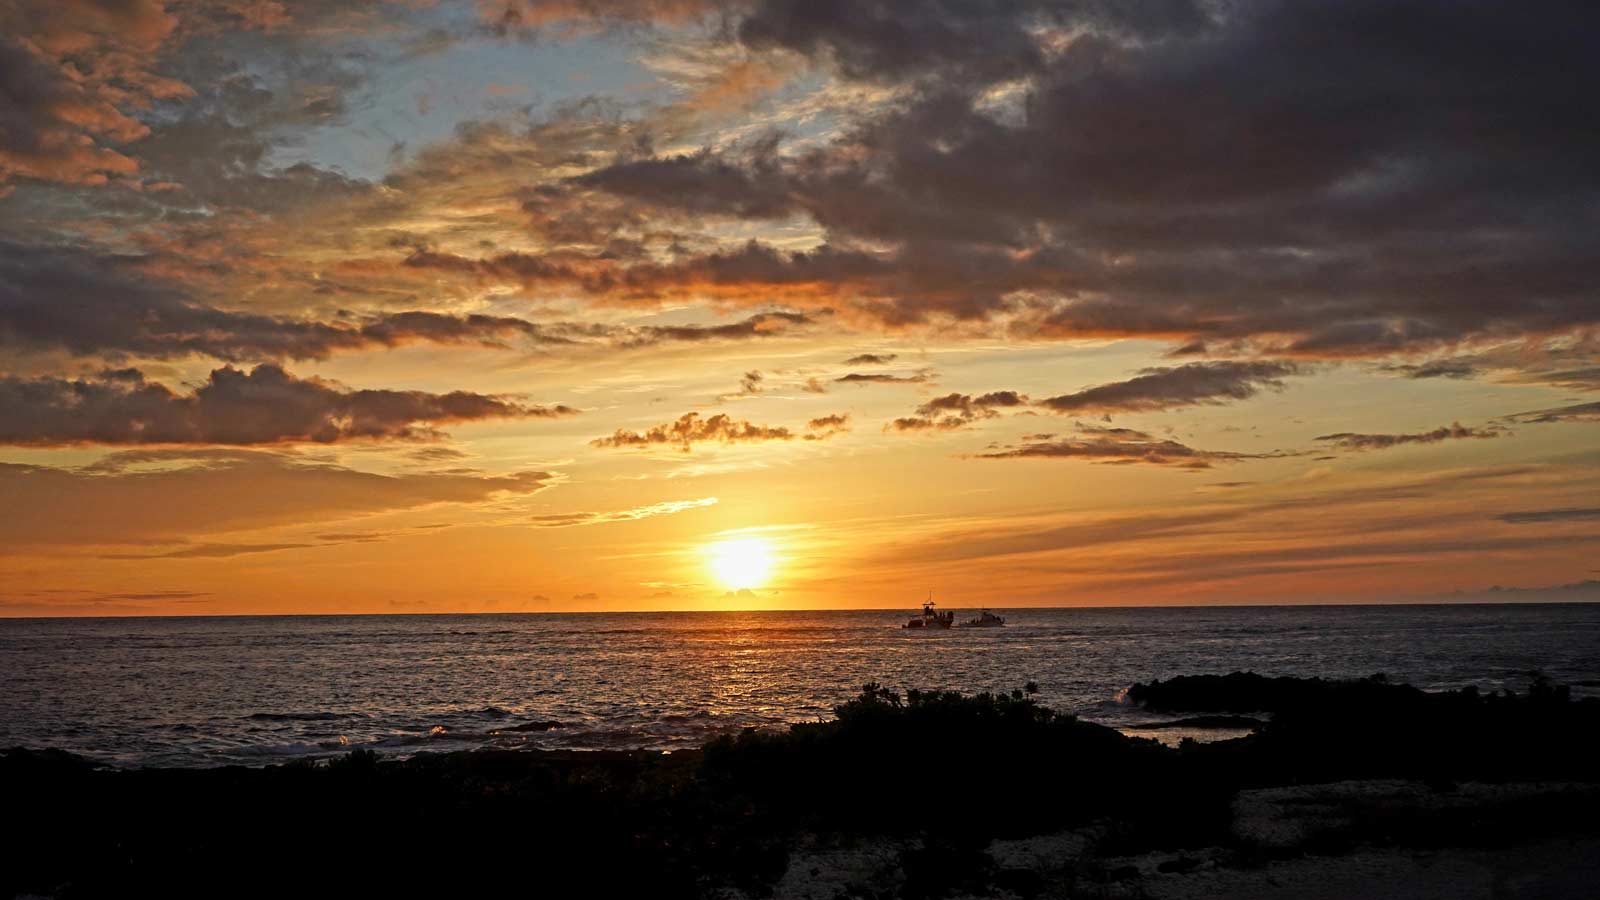 Kona Coastline during Sunset